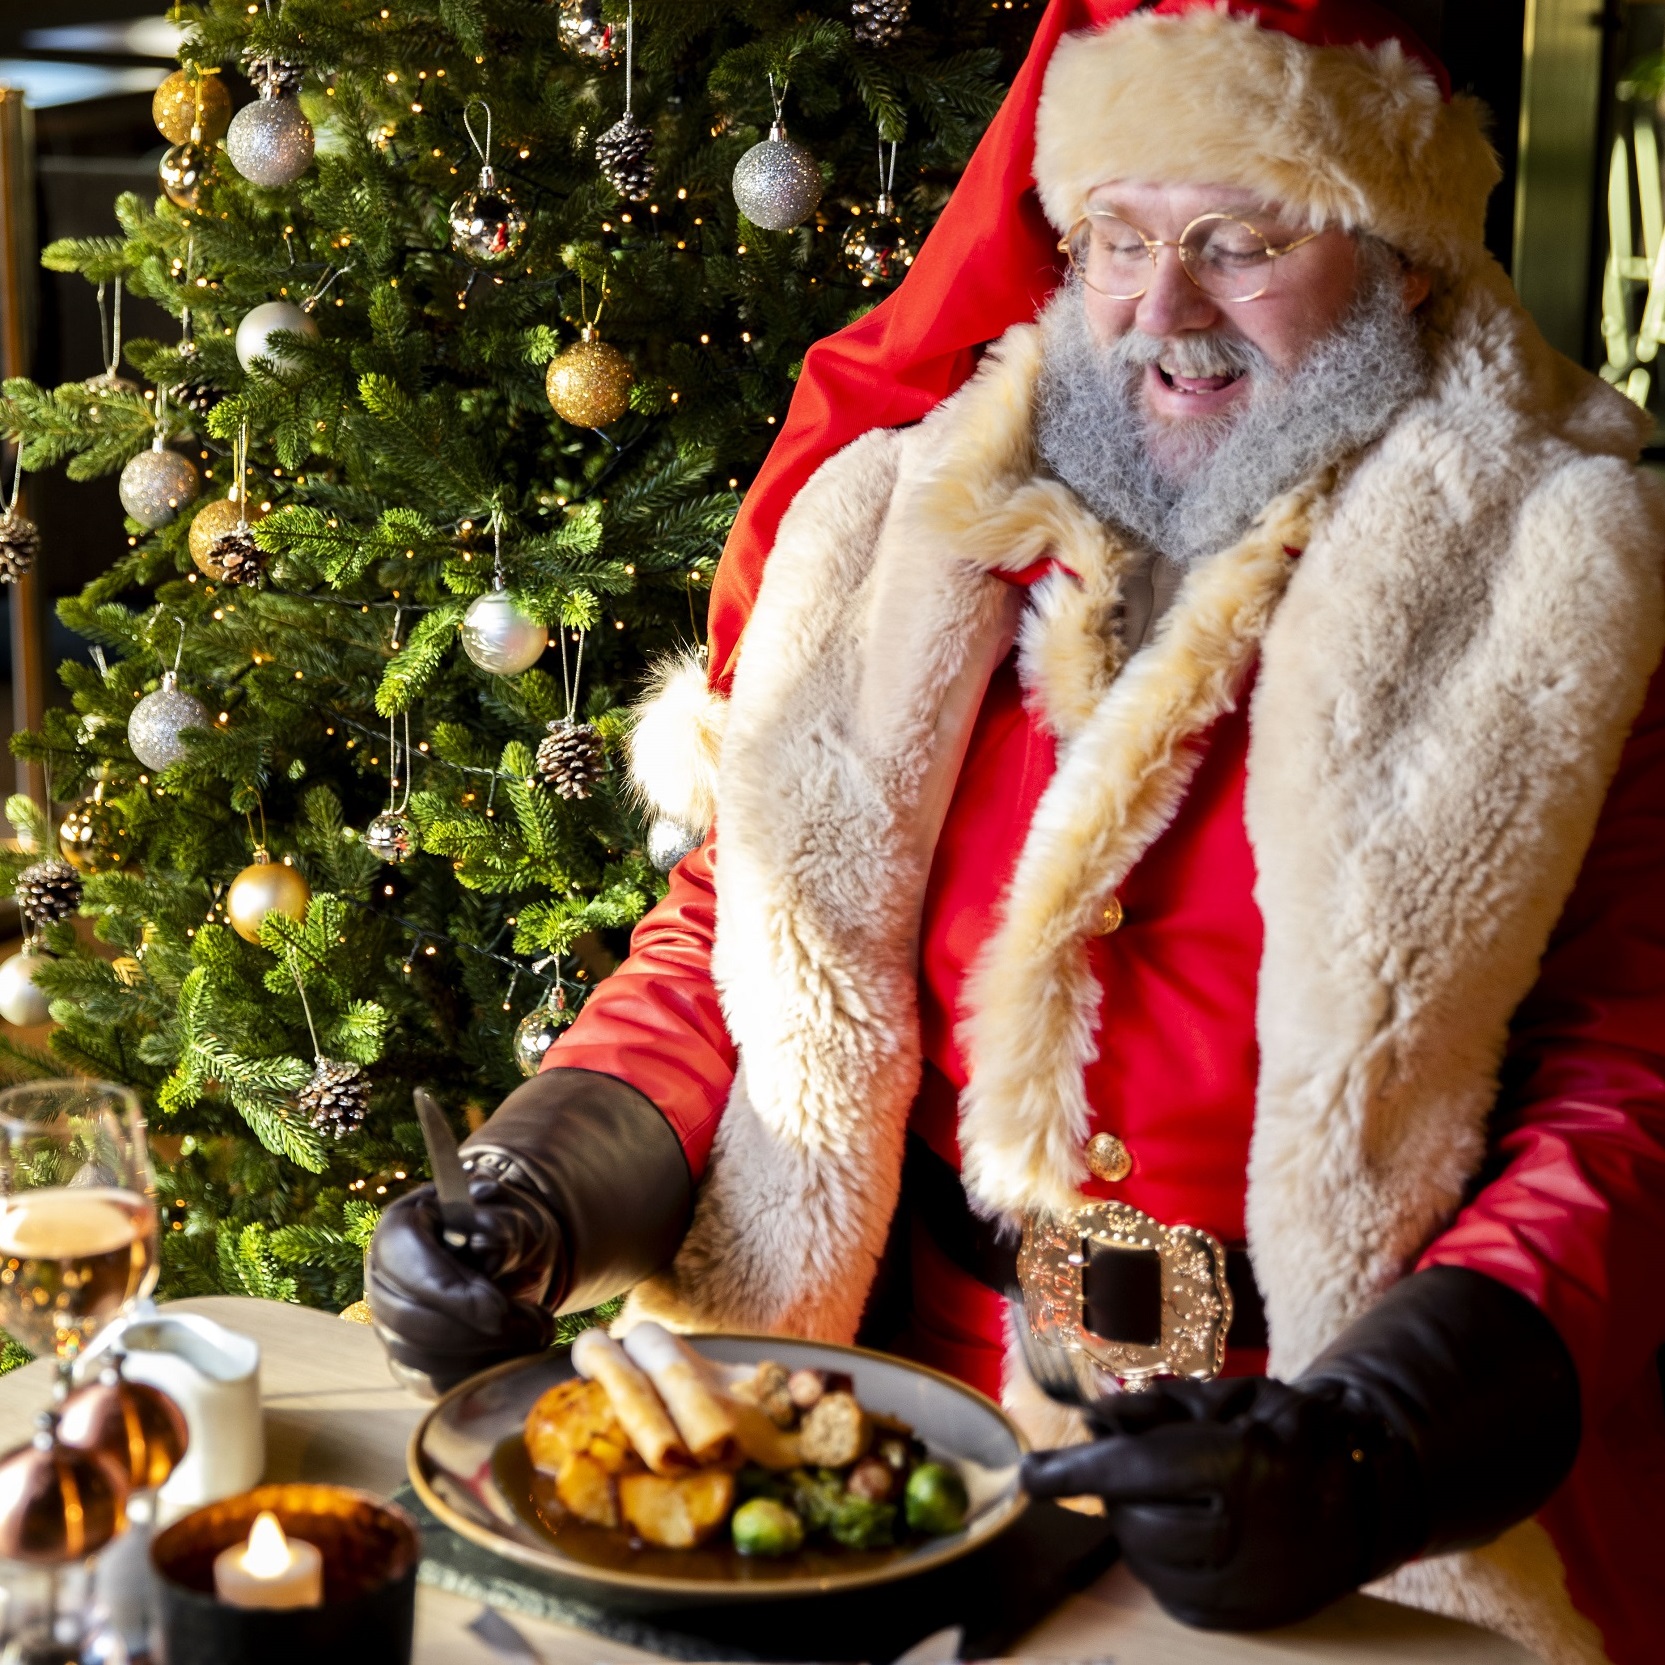 Santa Clause at NP20 bar and kitchen eating a roast dinner